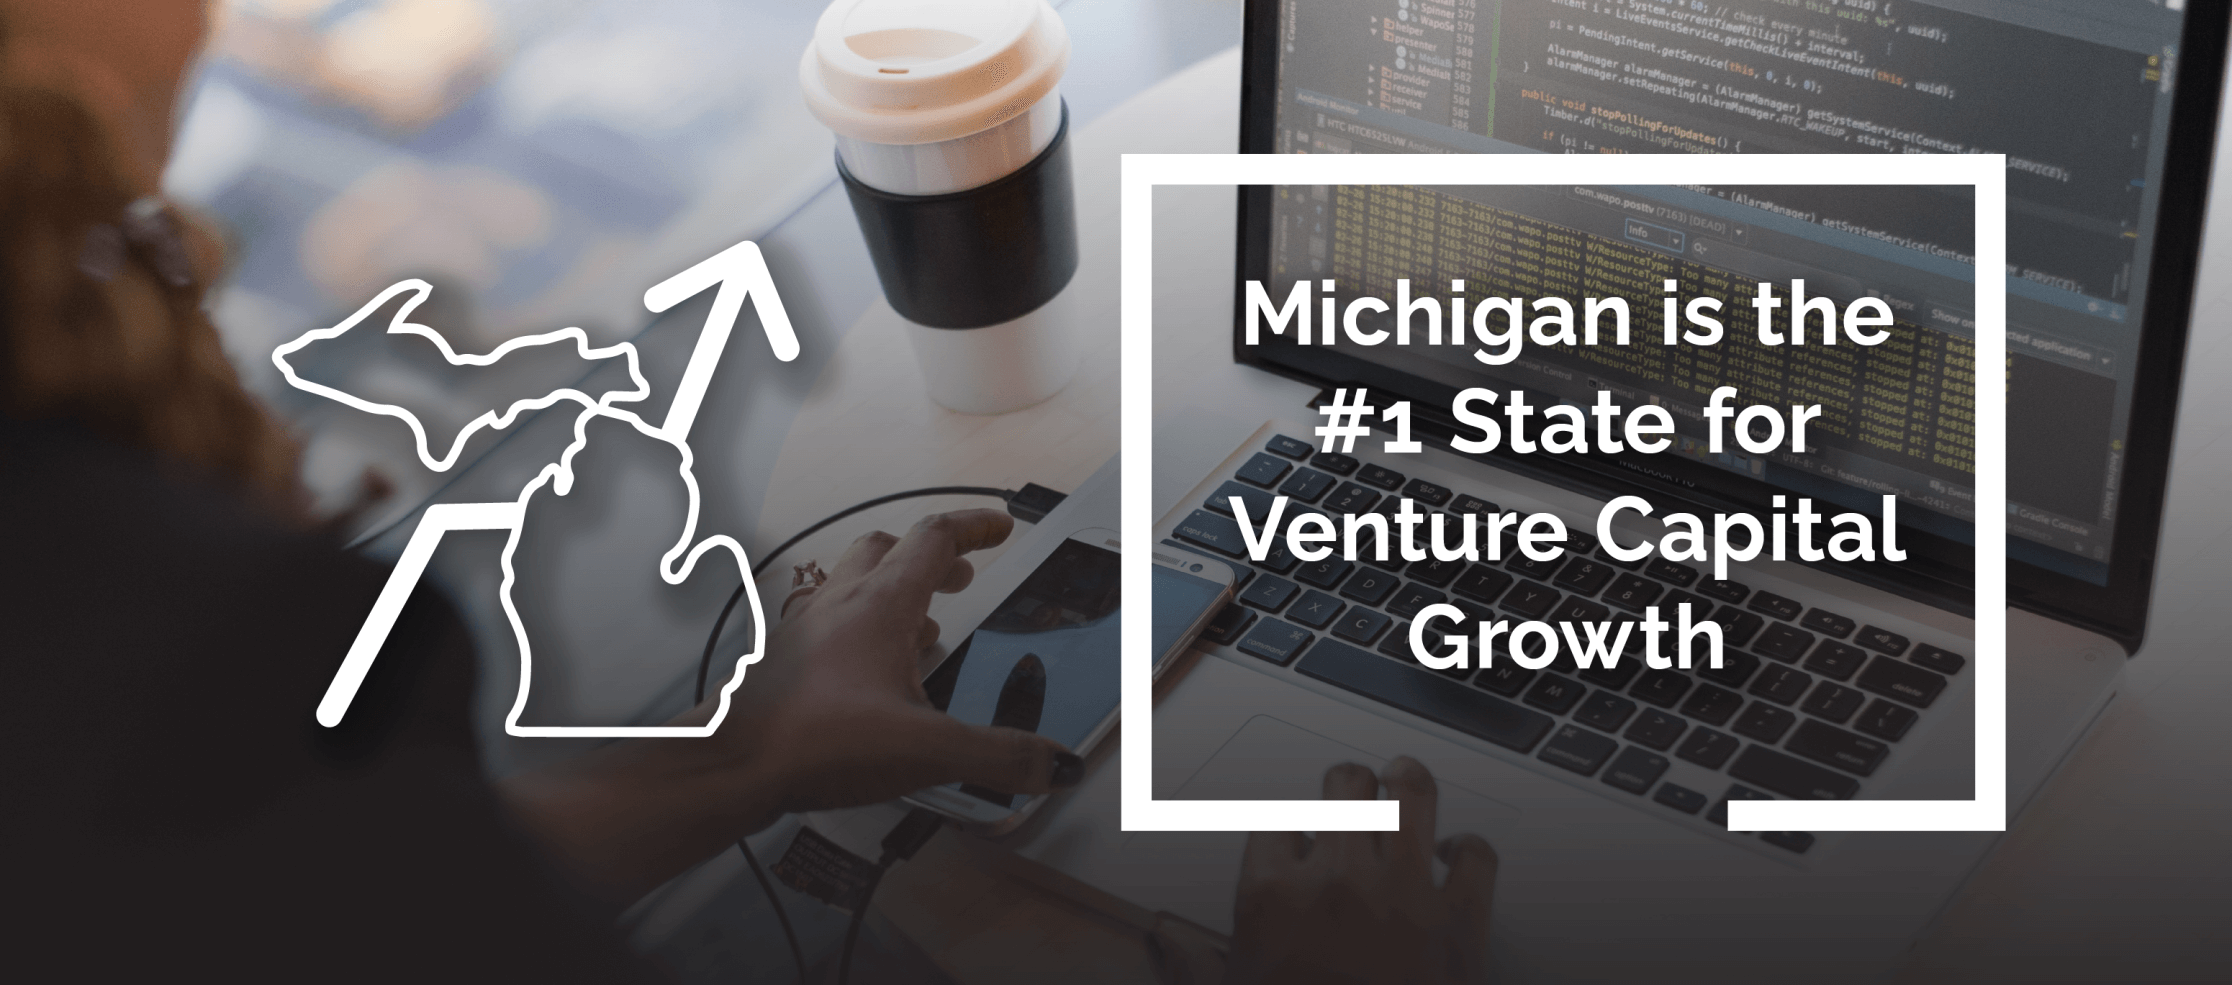 detroit tech hub - venture capital growth